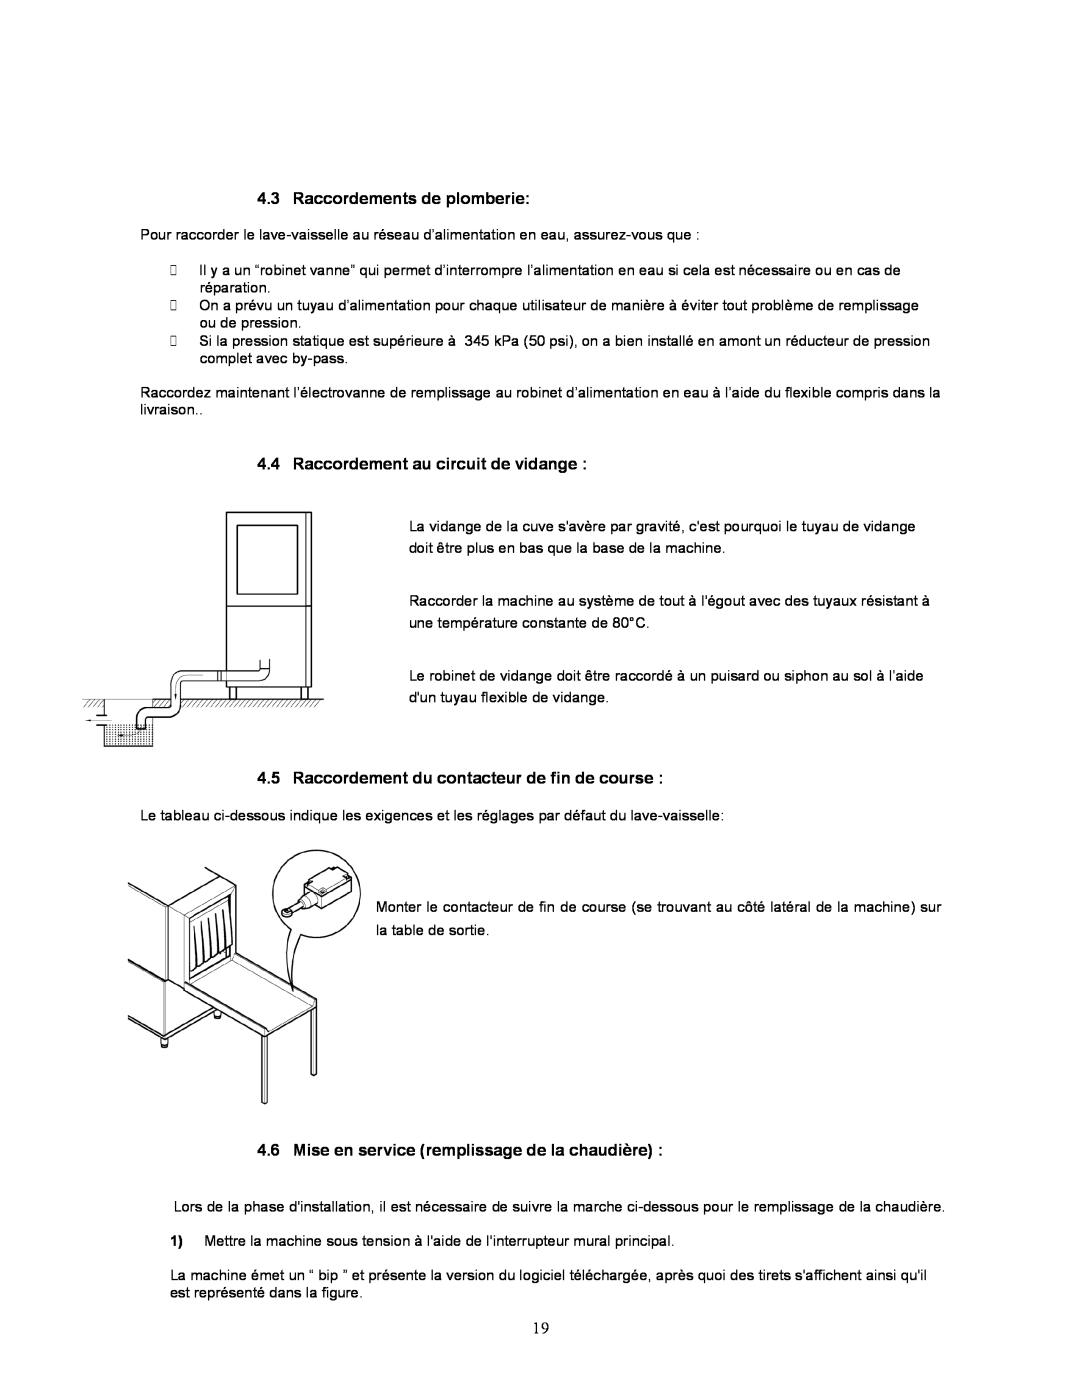 Jettech Metal Products FX-44 operation manual Raccordements de plomberie, Raccordement au circuit de vidange 